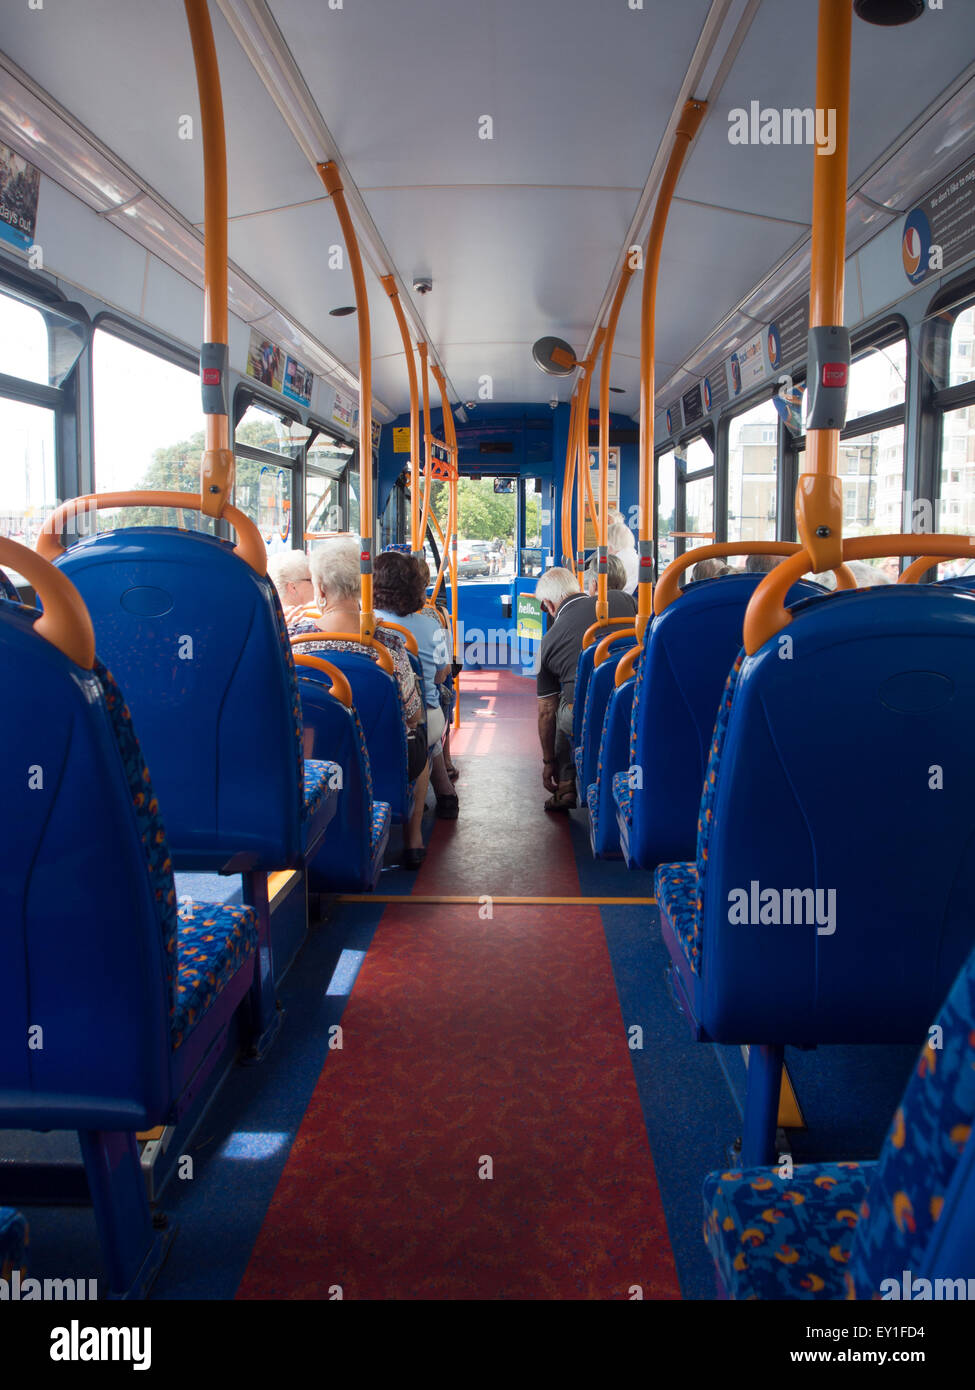 Interior of apublic transport bus with passengers Stock Photo